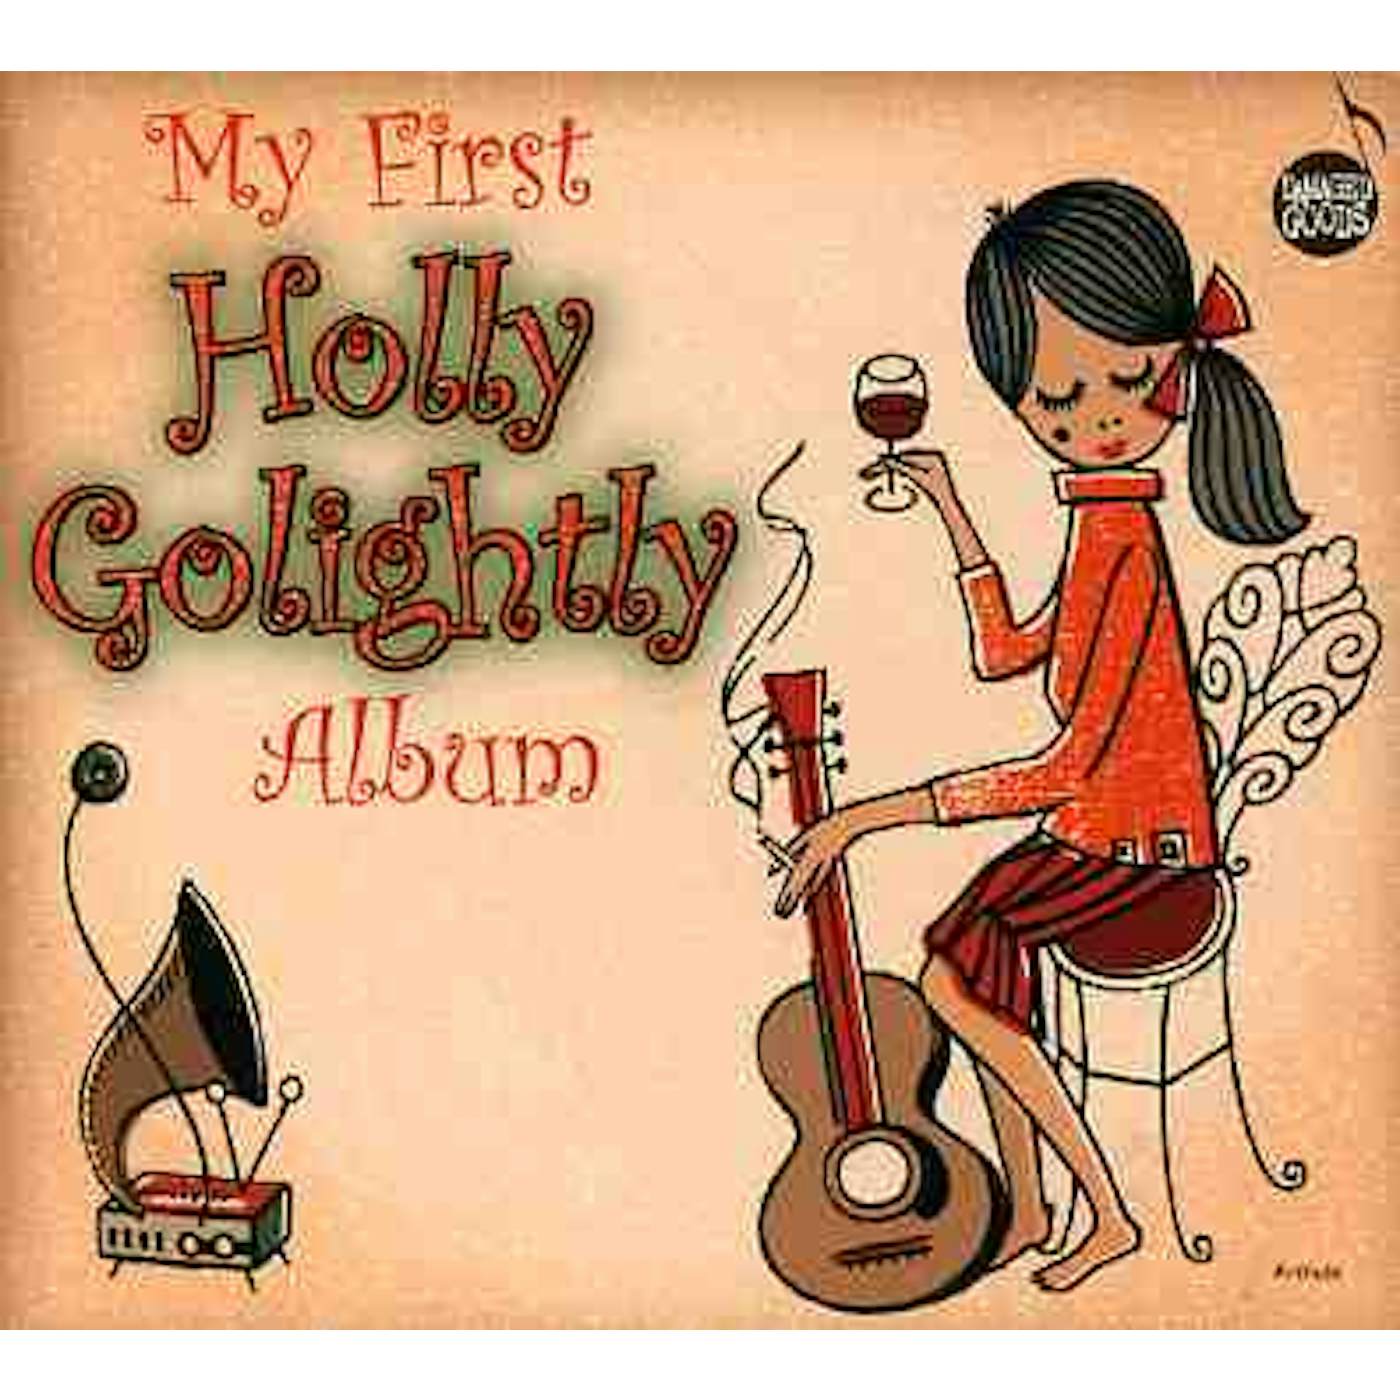 MY FIRST HOLLY GOLIGHTLY ALBUM CD